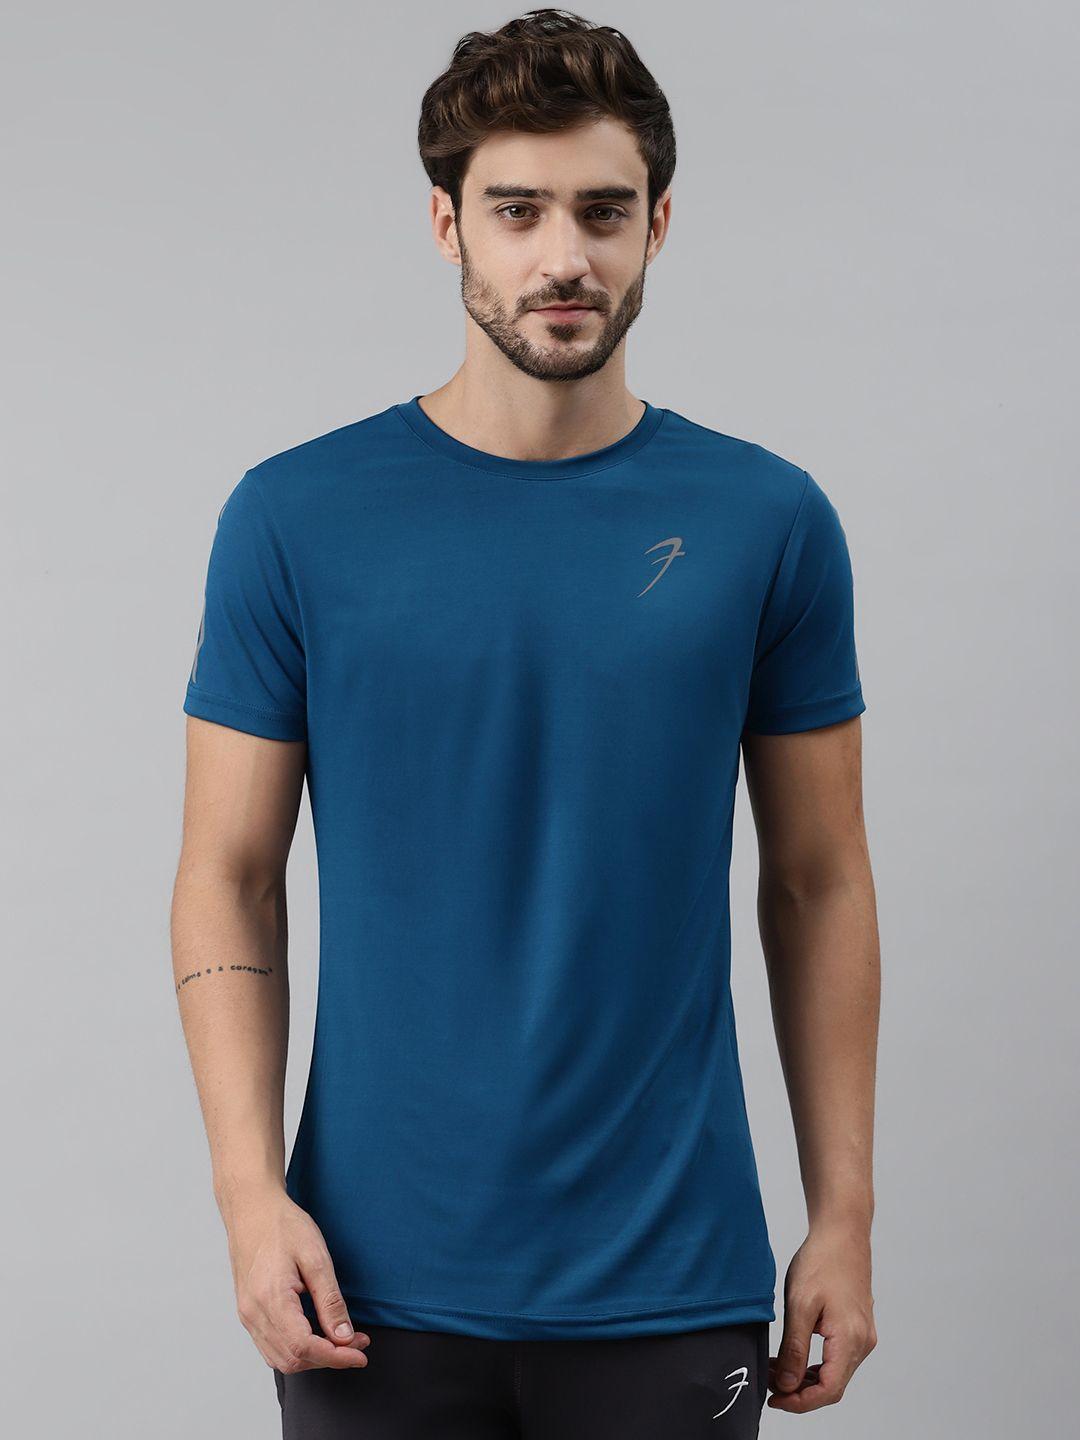 fuaark-men-teal-blue-slim-fit-solid-round-neck-training-t-shirt